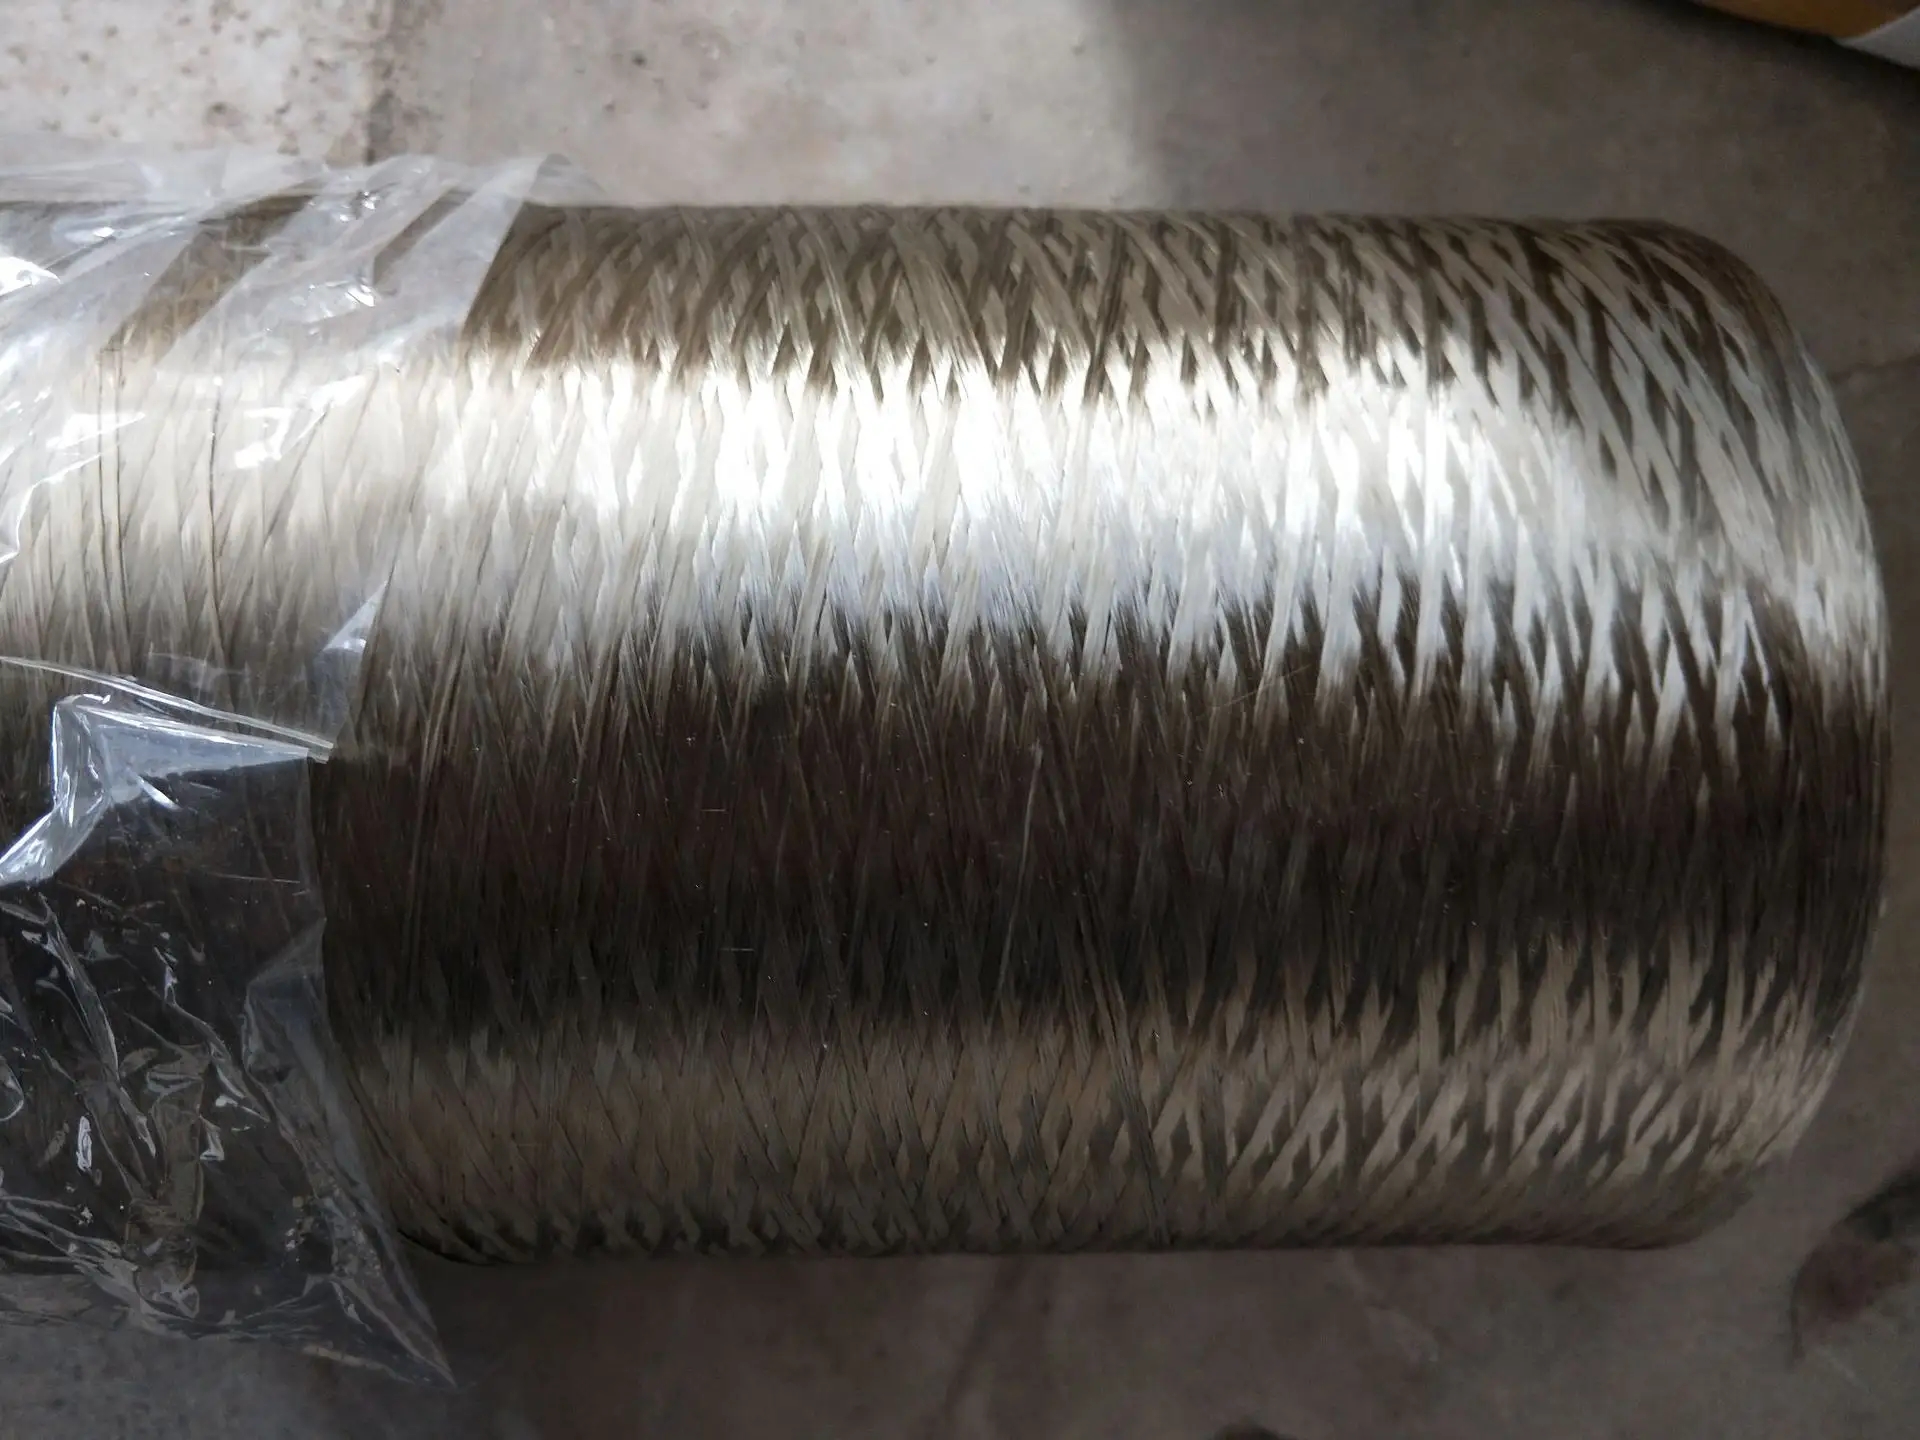 New inorganic green high-performance fiber material Basalt Fiber